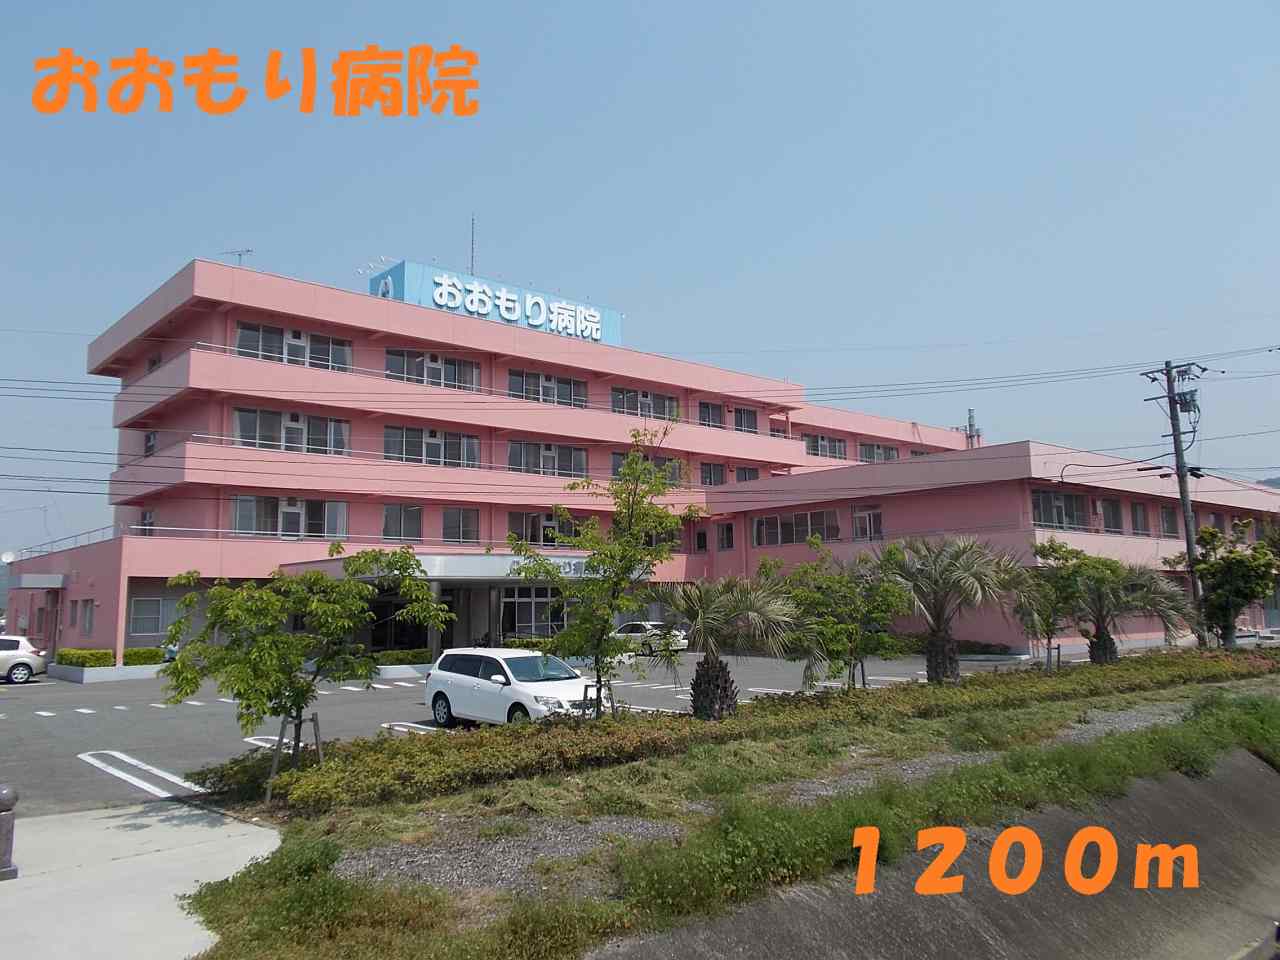 Hospital. Omori 1200m to the hospital (hospital)